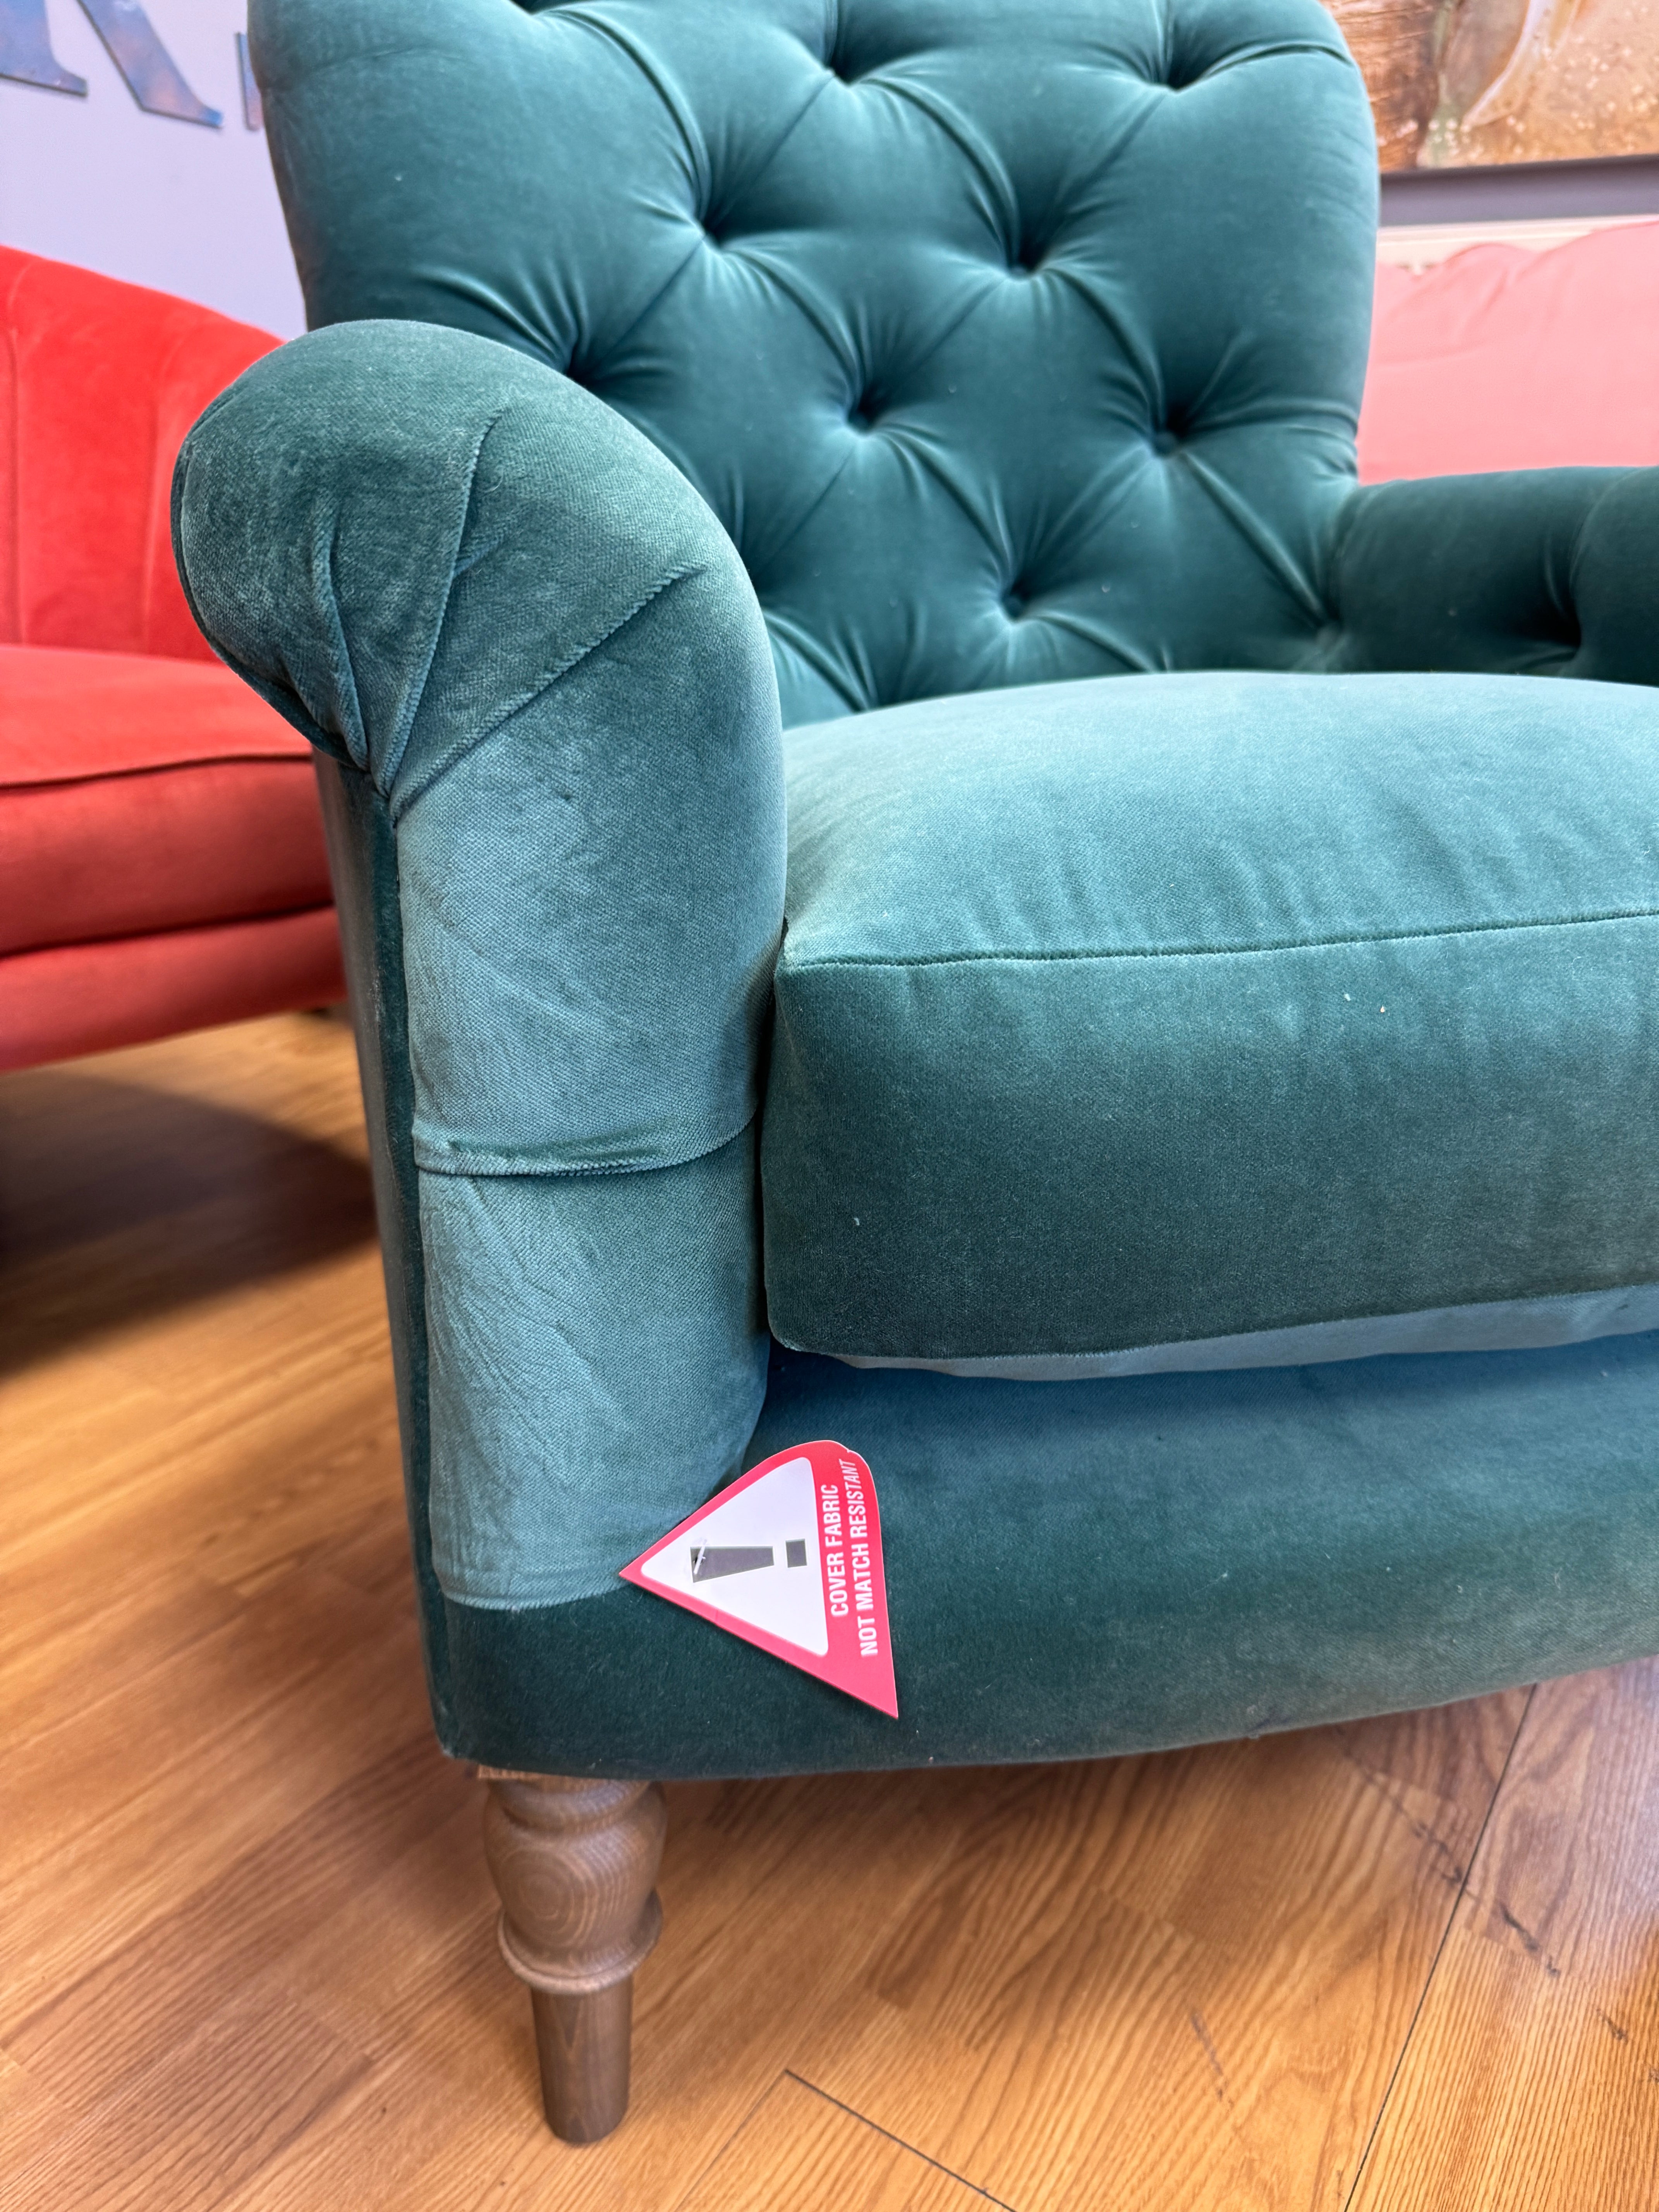 SOFA.COM POPPY Accent button back armchair in Jade smart velvet